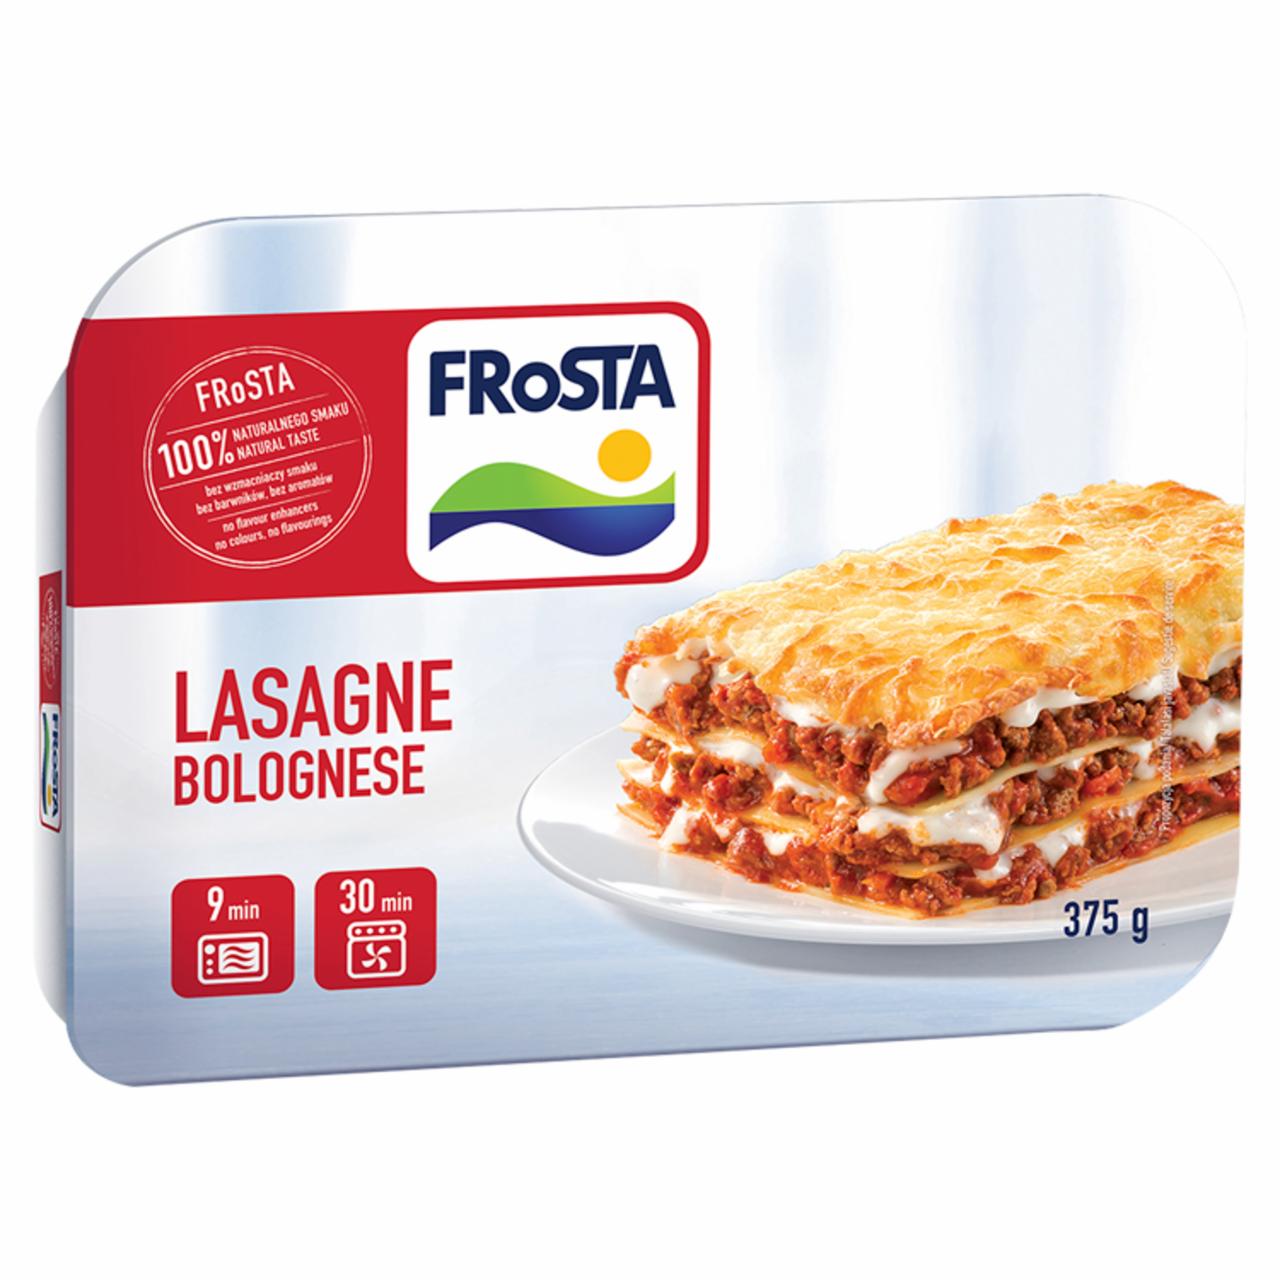 Zdjęcia - FRoSTA Lasagne Bolognese 375 g